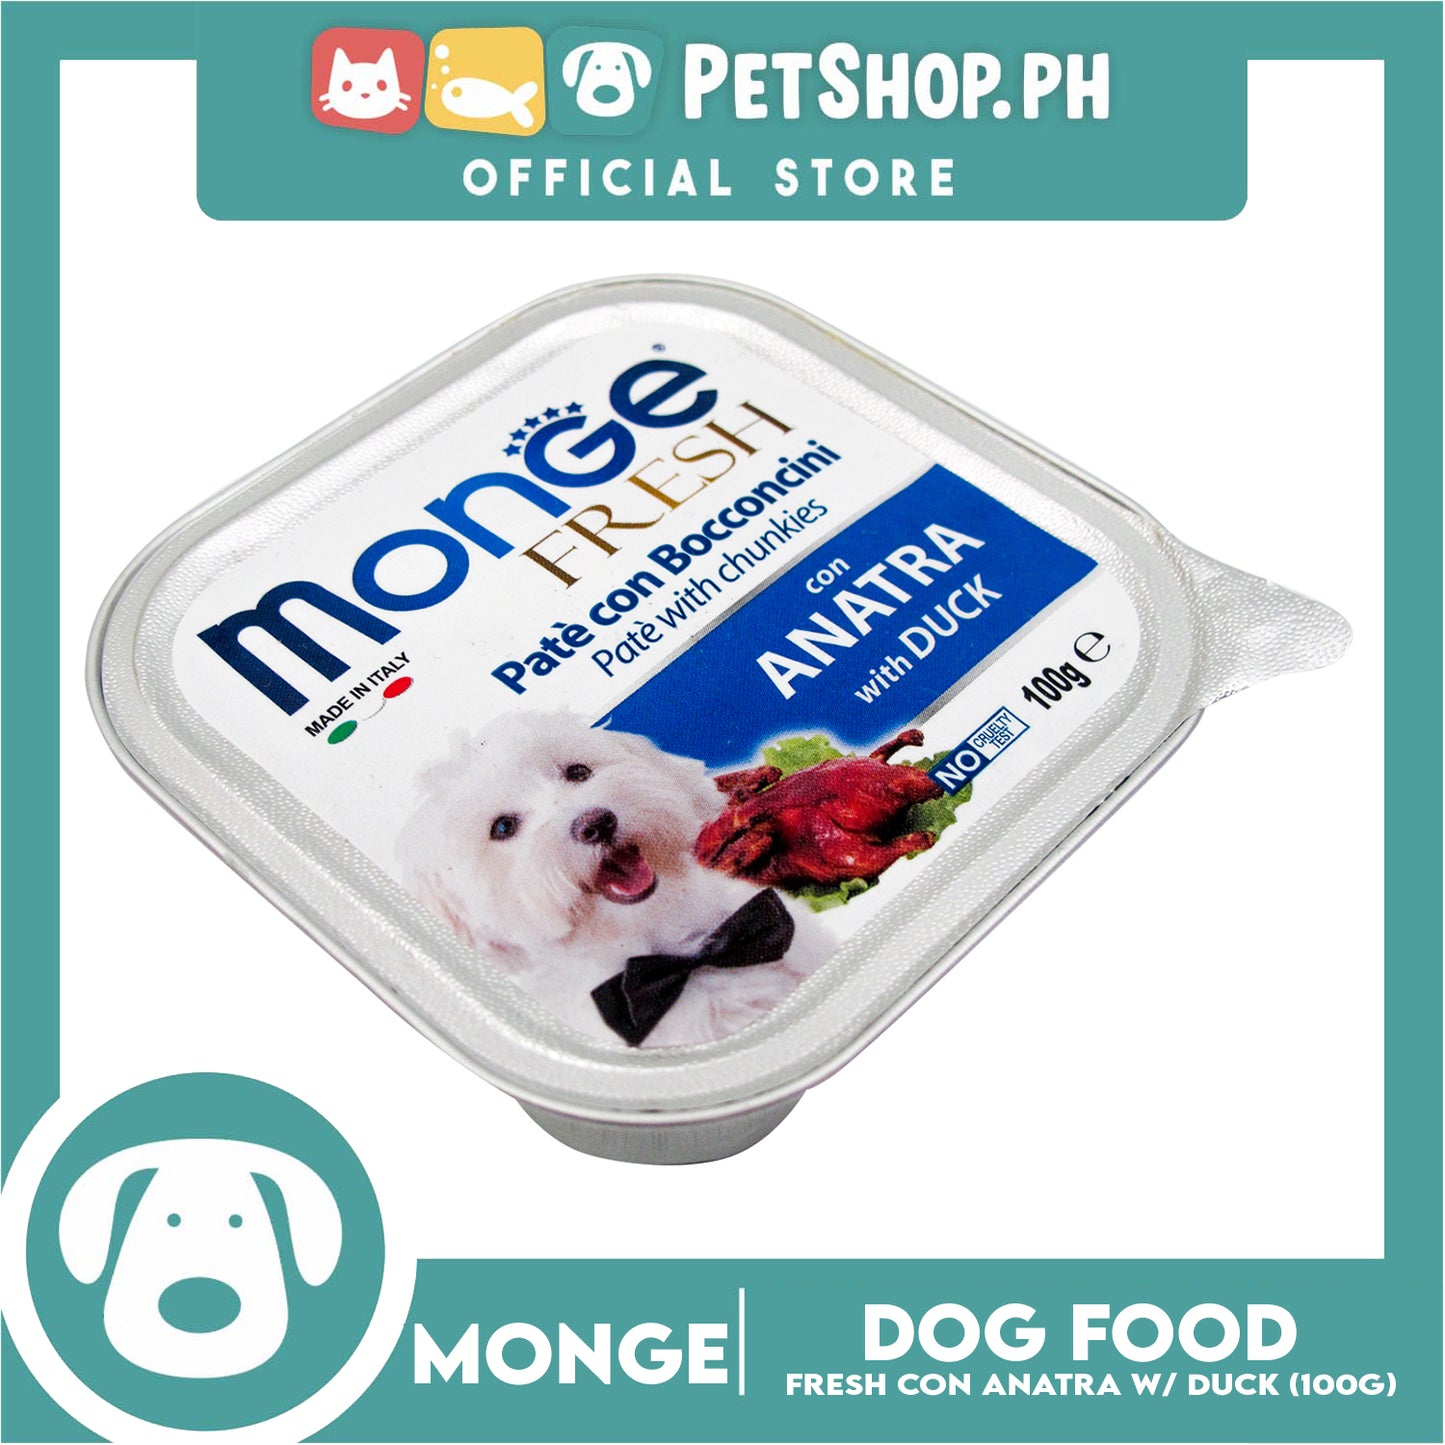 Monge Fresh Pate And Chunkies 100g (Anatra With Duck) Dog Wet Food